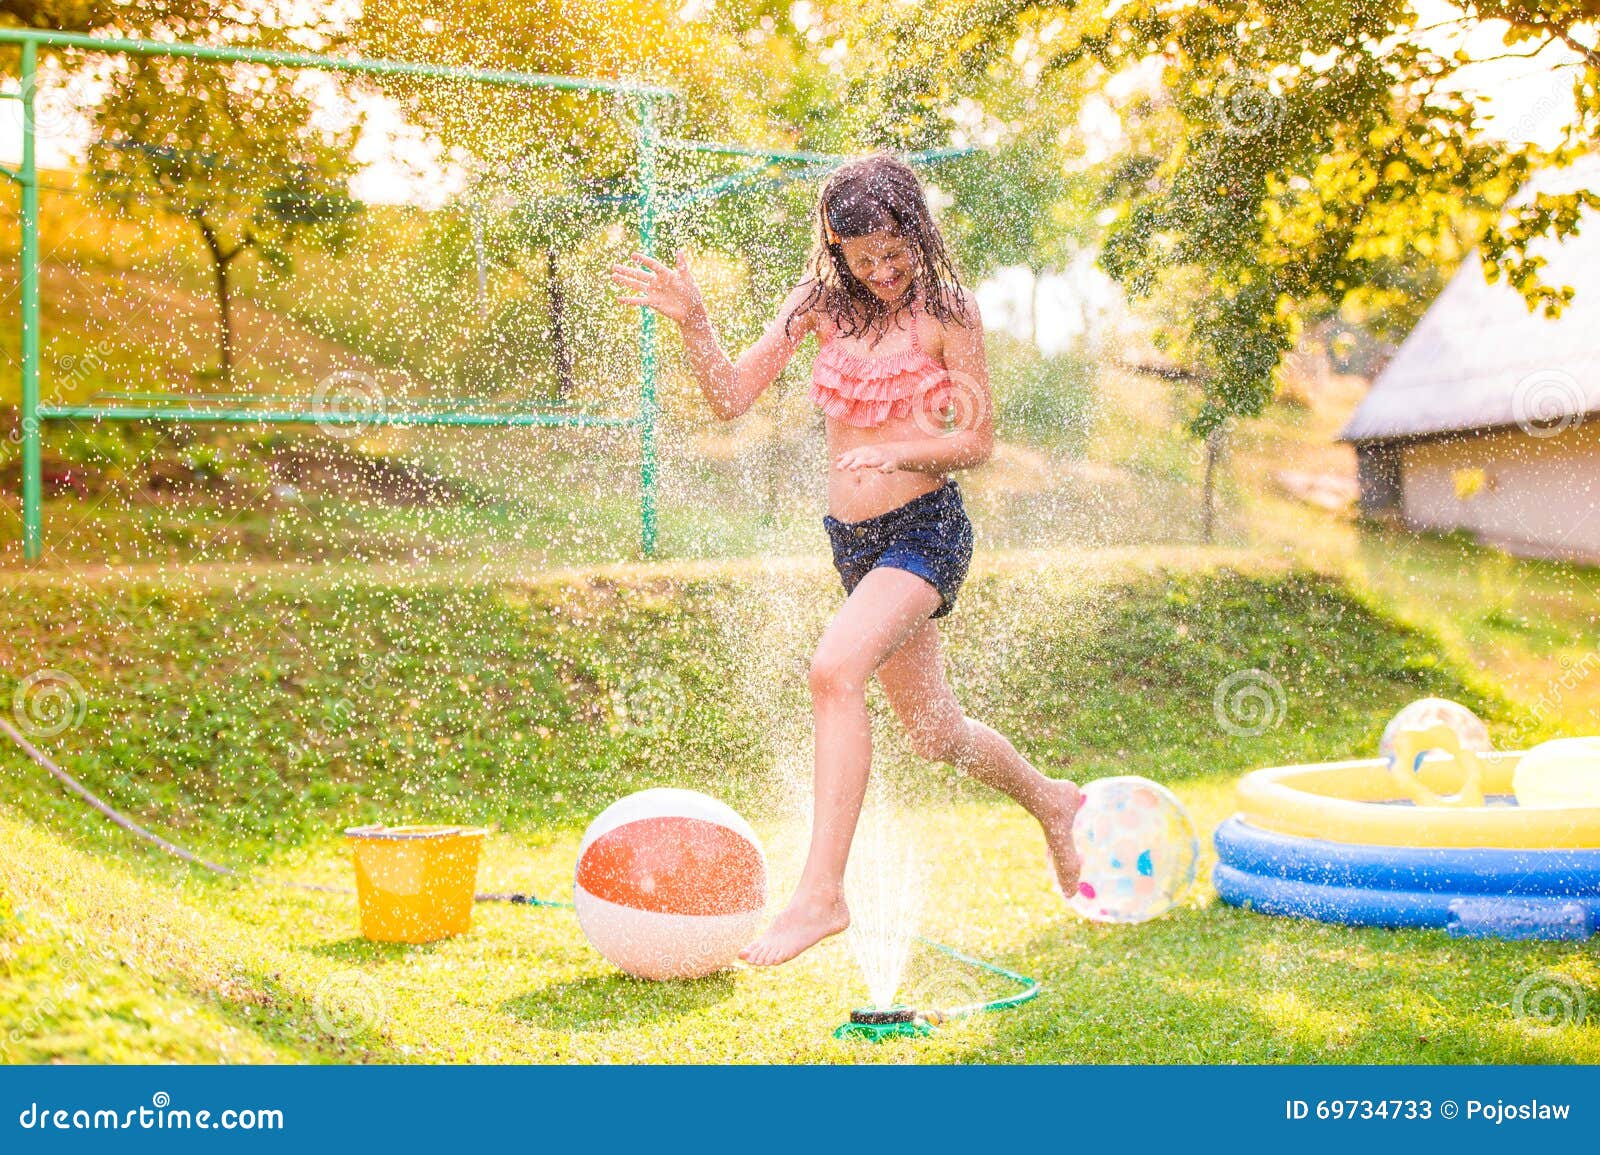 Girl running above a sprinkler, sunny summer back yard 